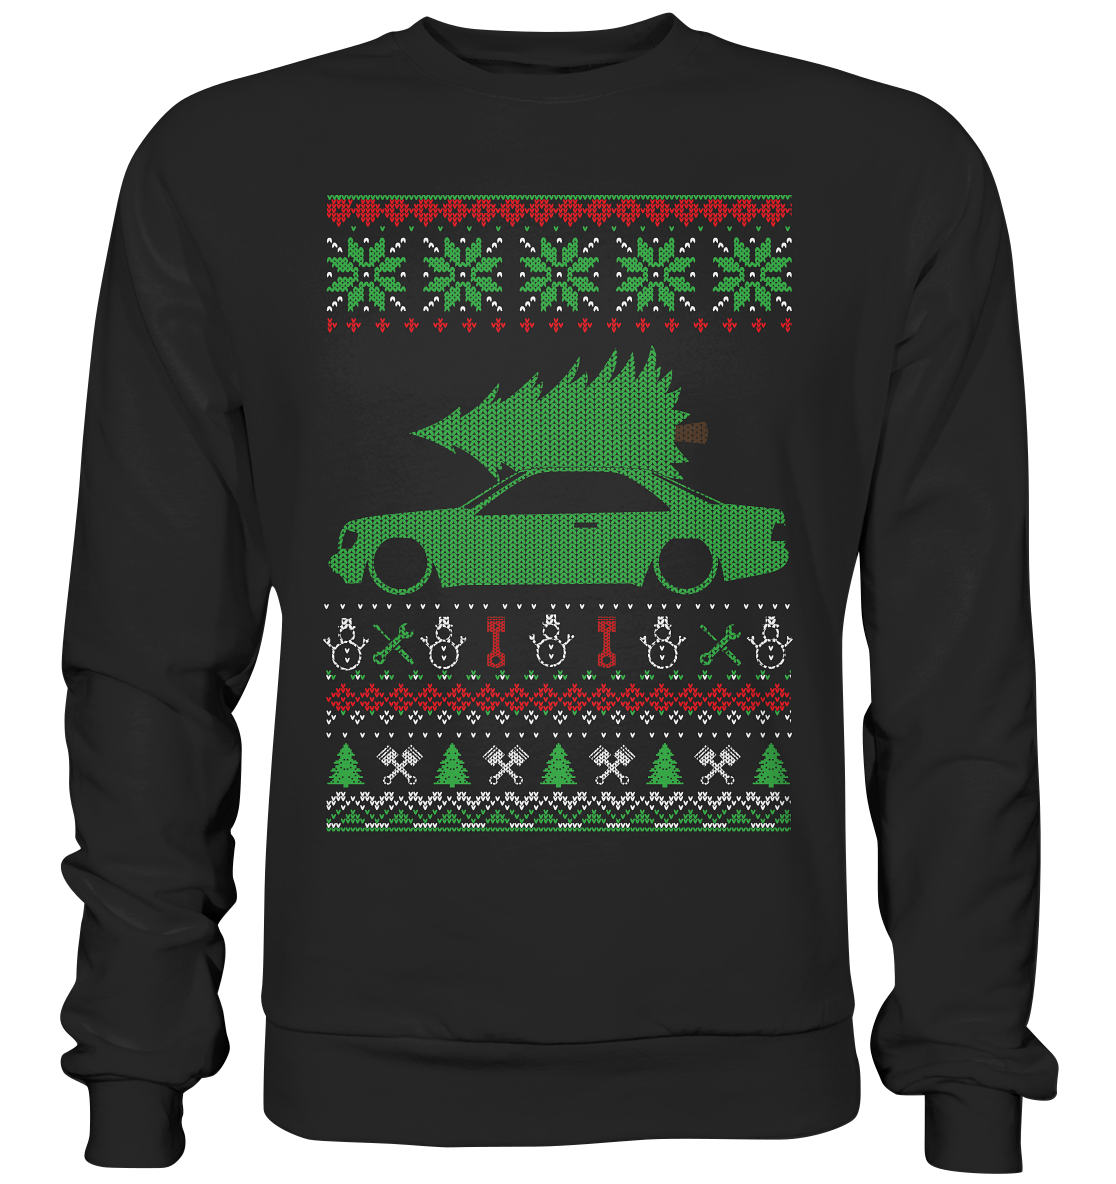 CODUGLY_MGKW124 - Premium Sweatshirt